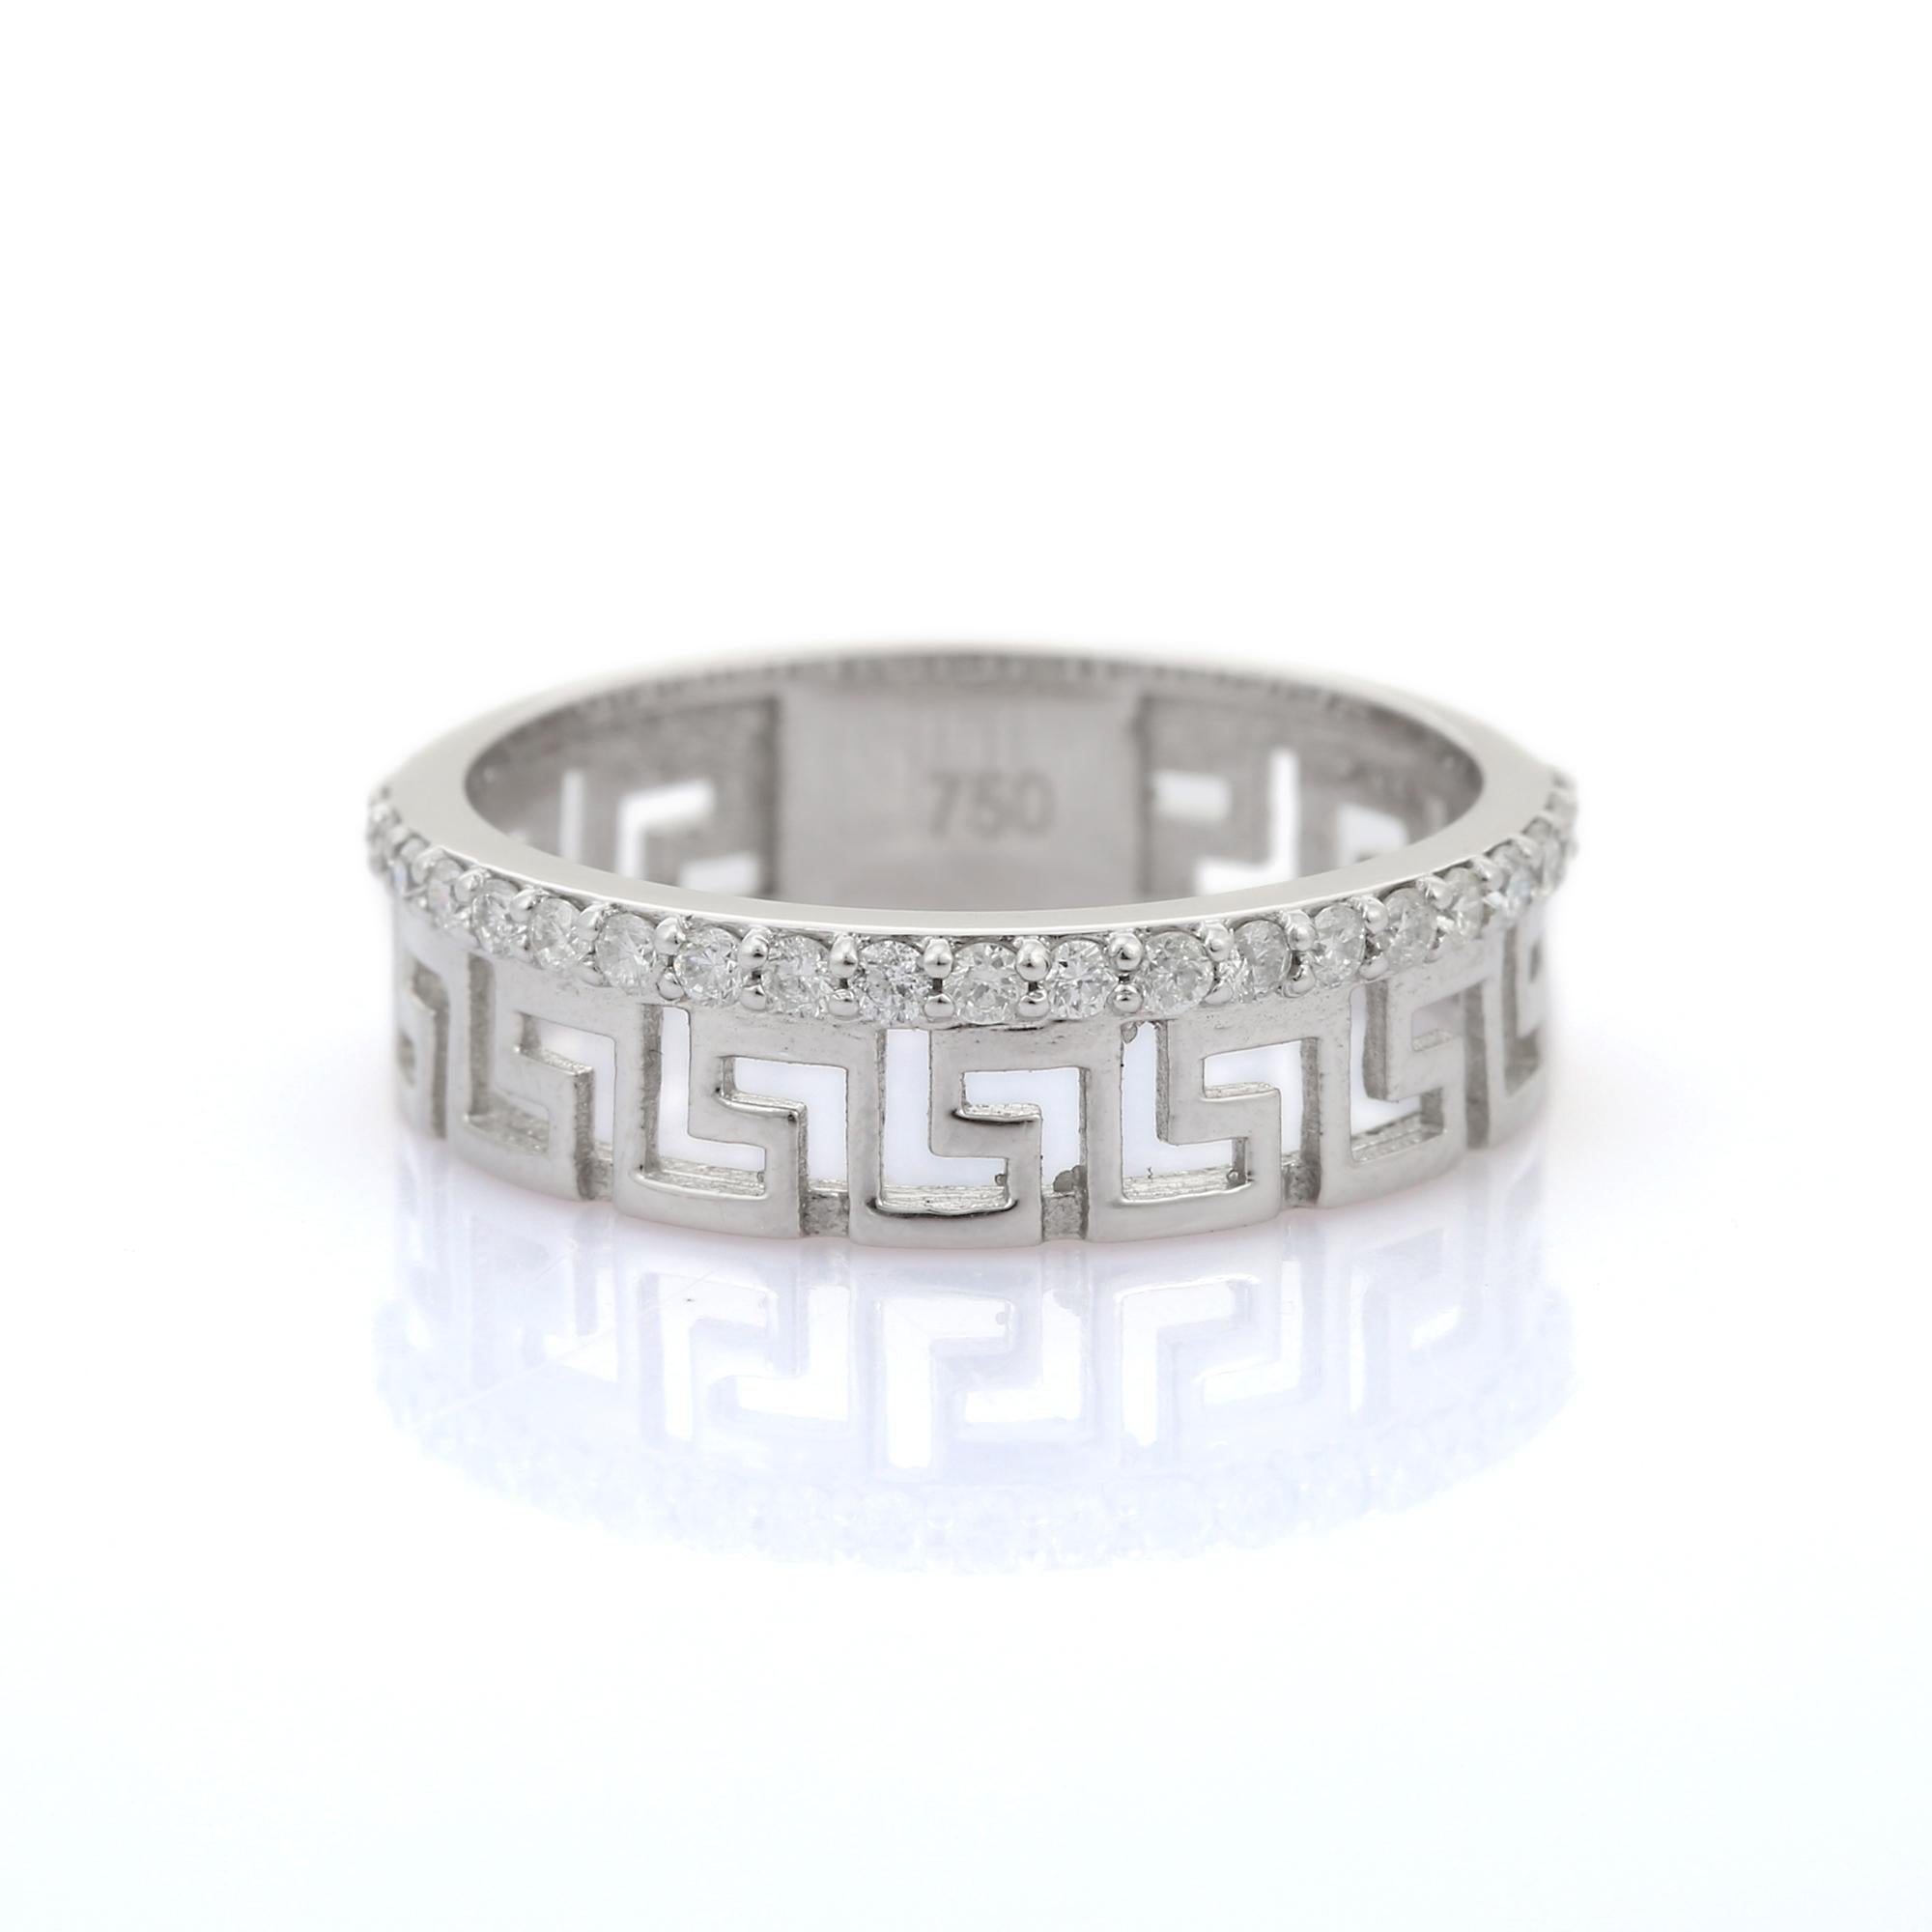 For Sale:  Unisex 18K White Gold Geometrical Diamond Band Ring, Wedding Band Ring 2